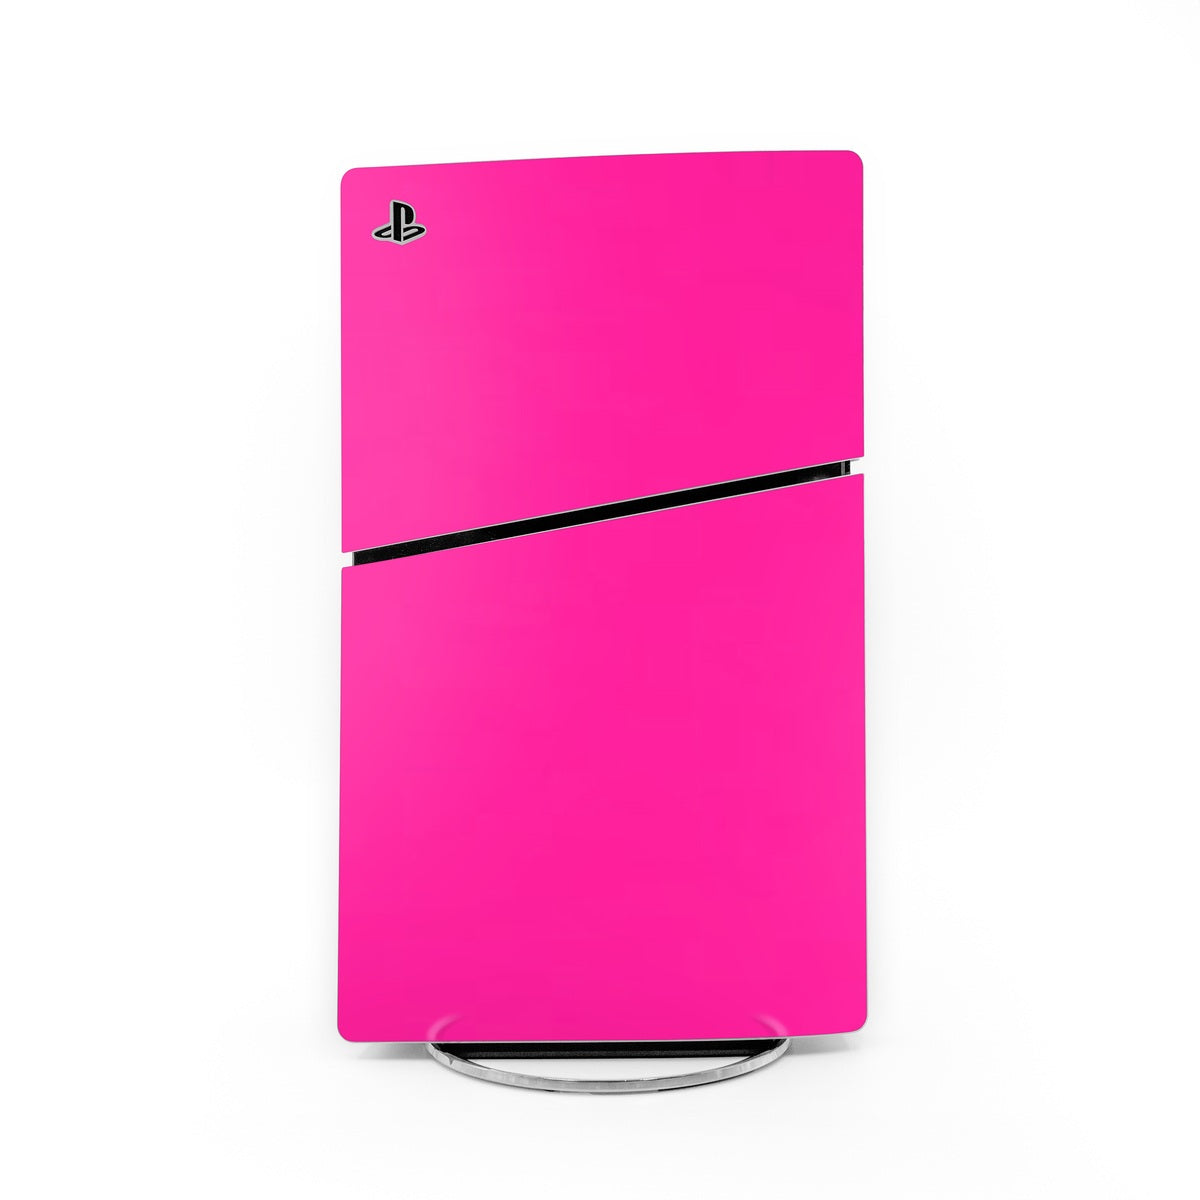 Solid State Malibu Pink - Sony PS5 Slim Skin